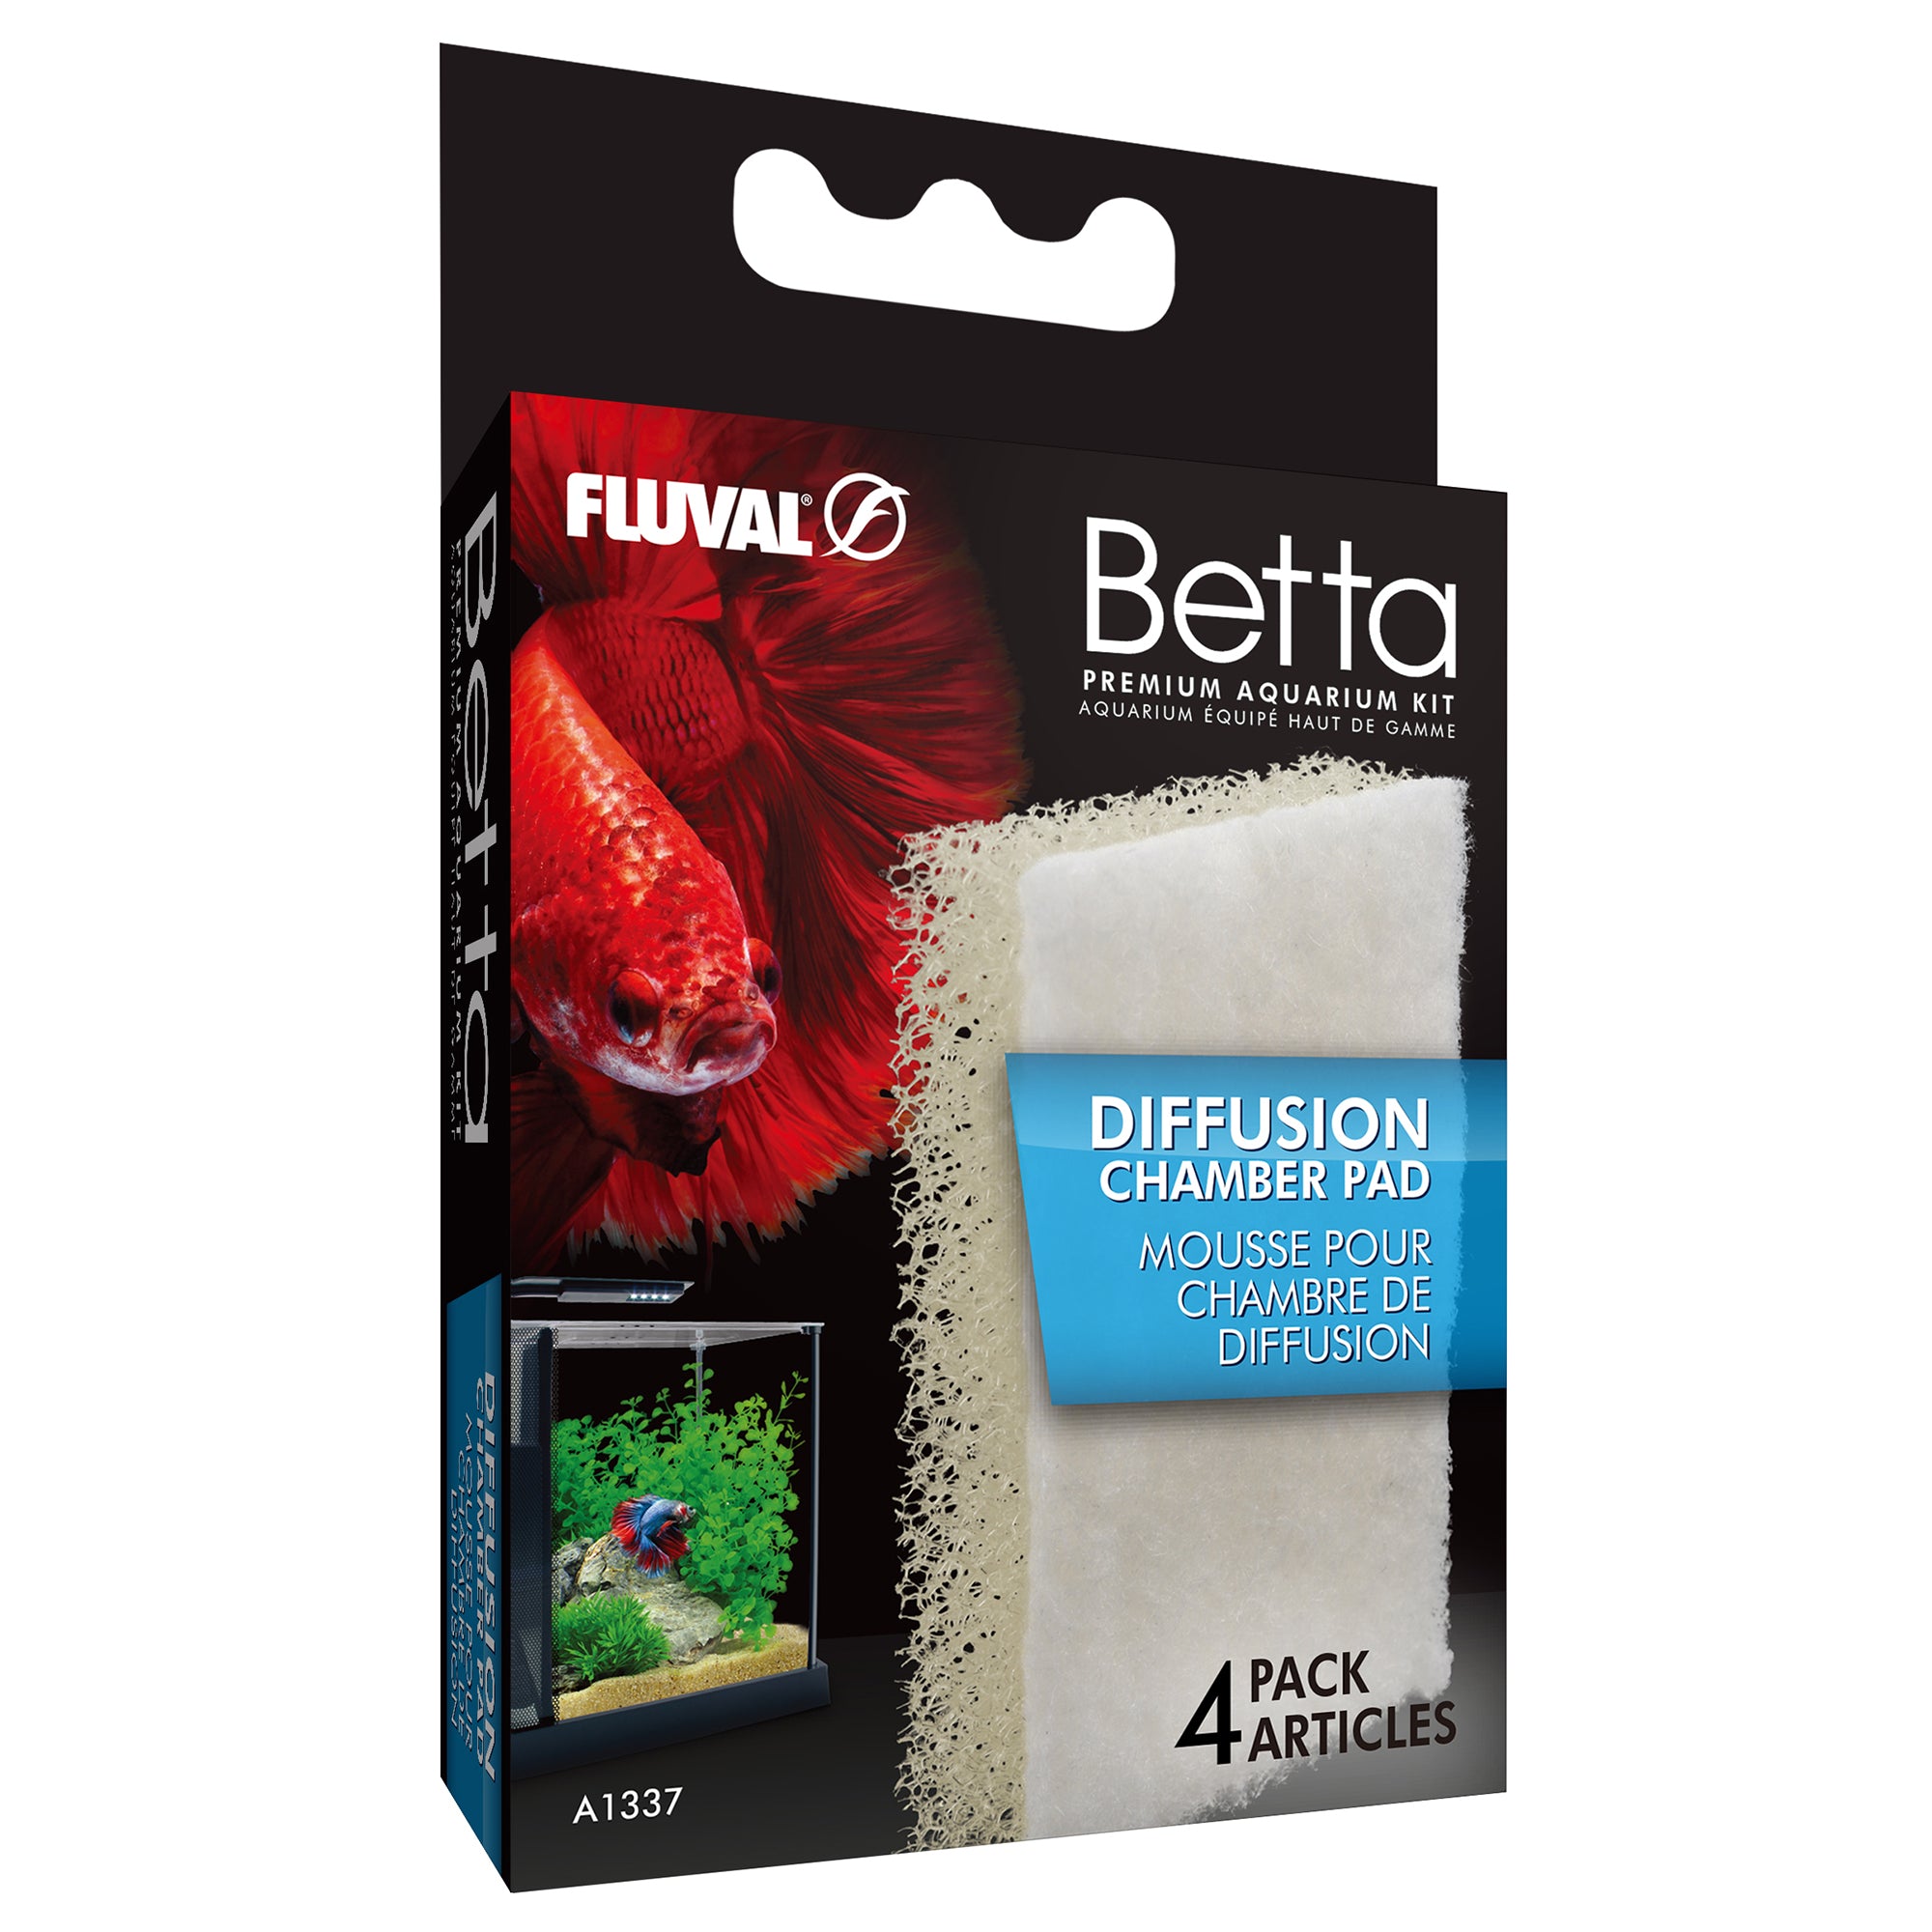 Fluval Betta Diffusion Chamber Pad - 4 pack - For Betta Premium Aquari